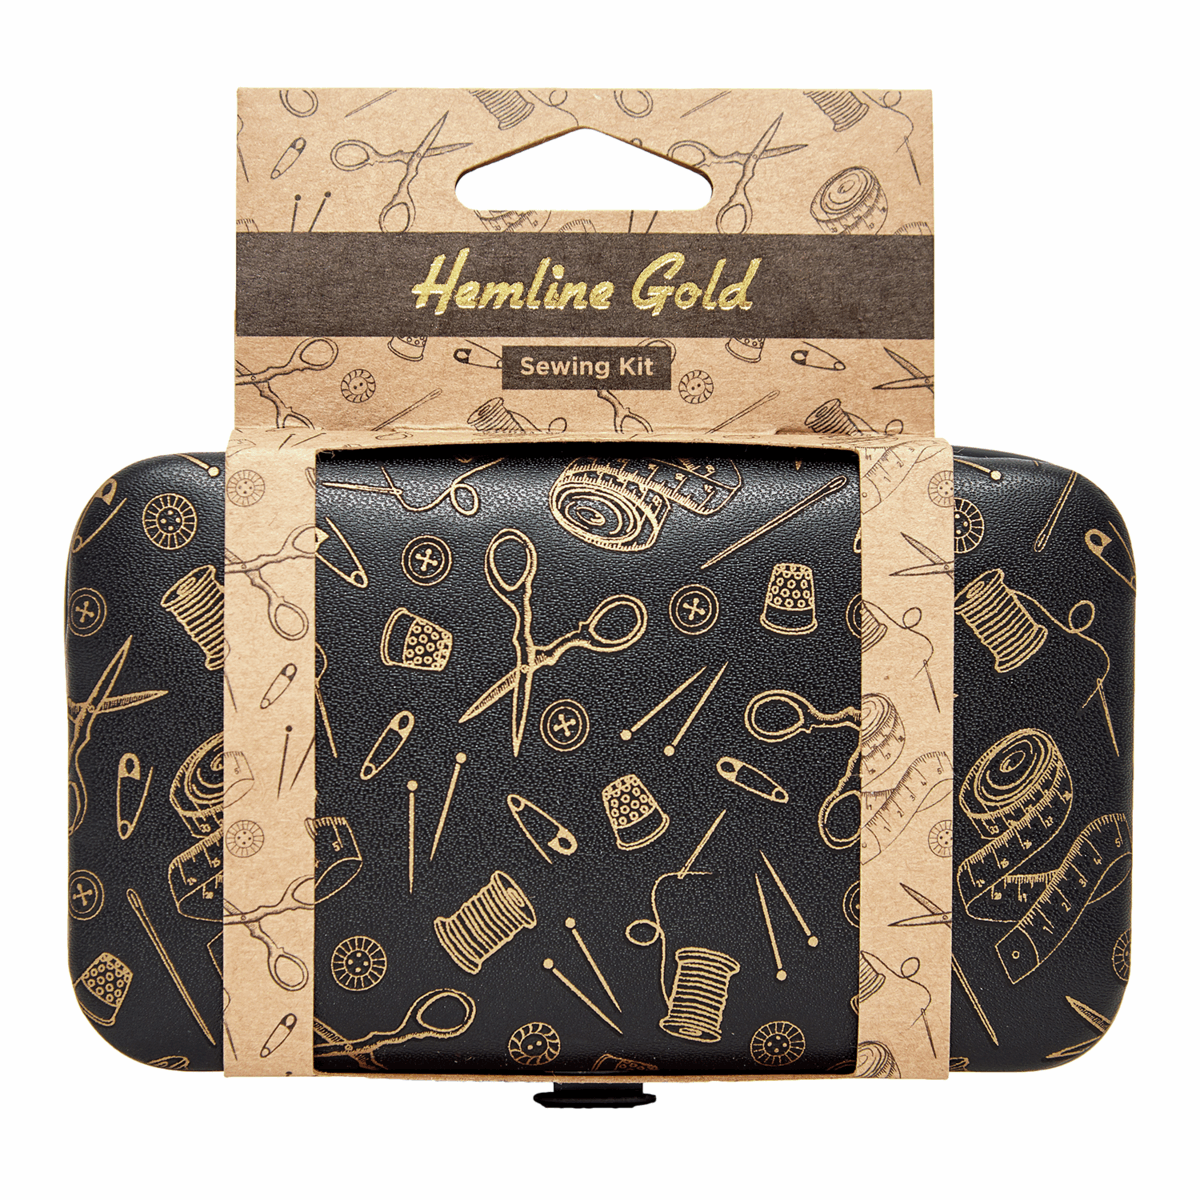 Premium Zip Case Sewing Kit - Gold Notions *Hemline Gold Edition*